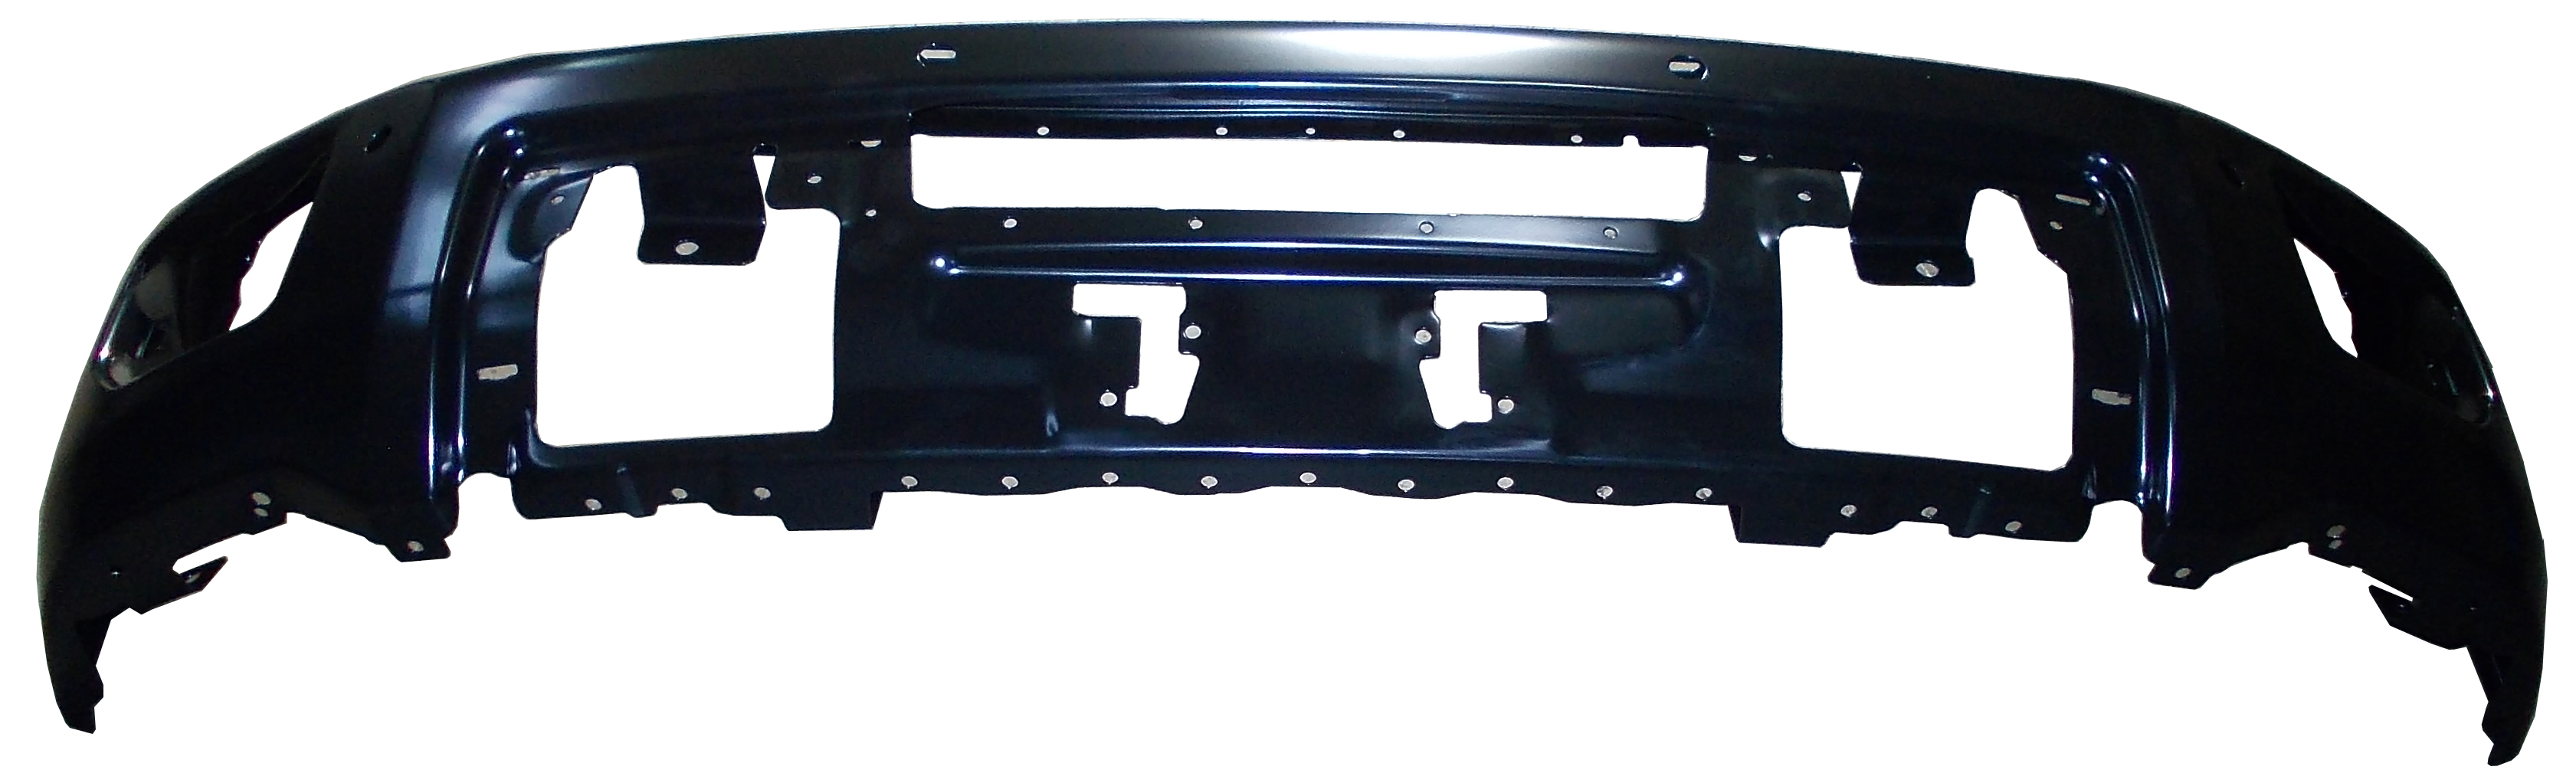 Aftermarket METAL FRONT BUMPERS for GMC - SIERRA 3500 HD, SIERRA 3500 HD,15-19,Front bumper face bar